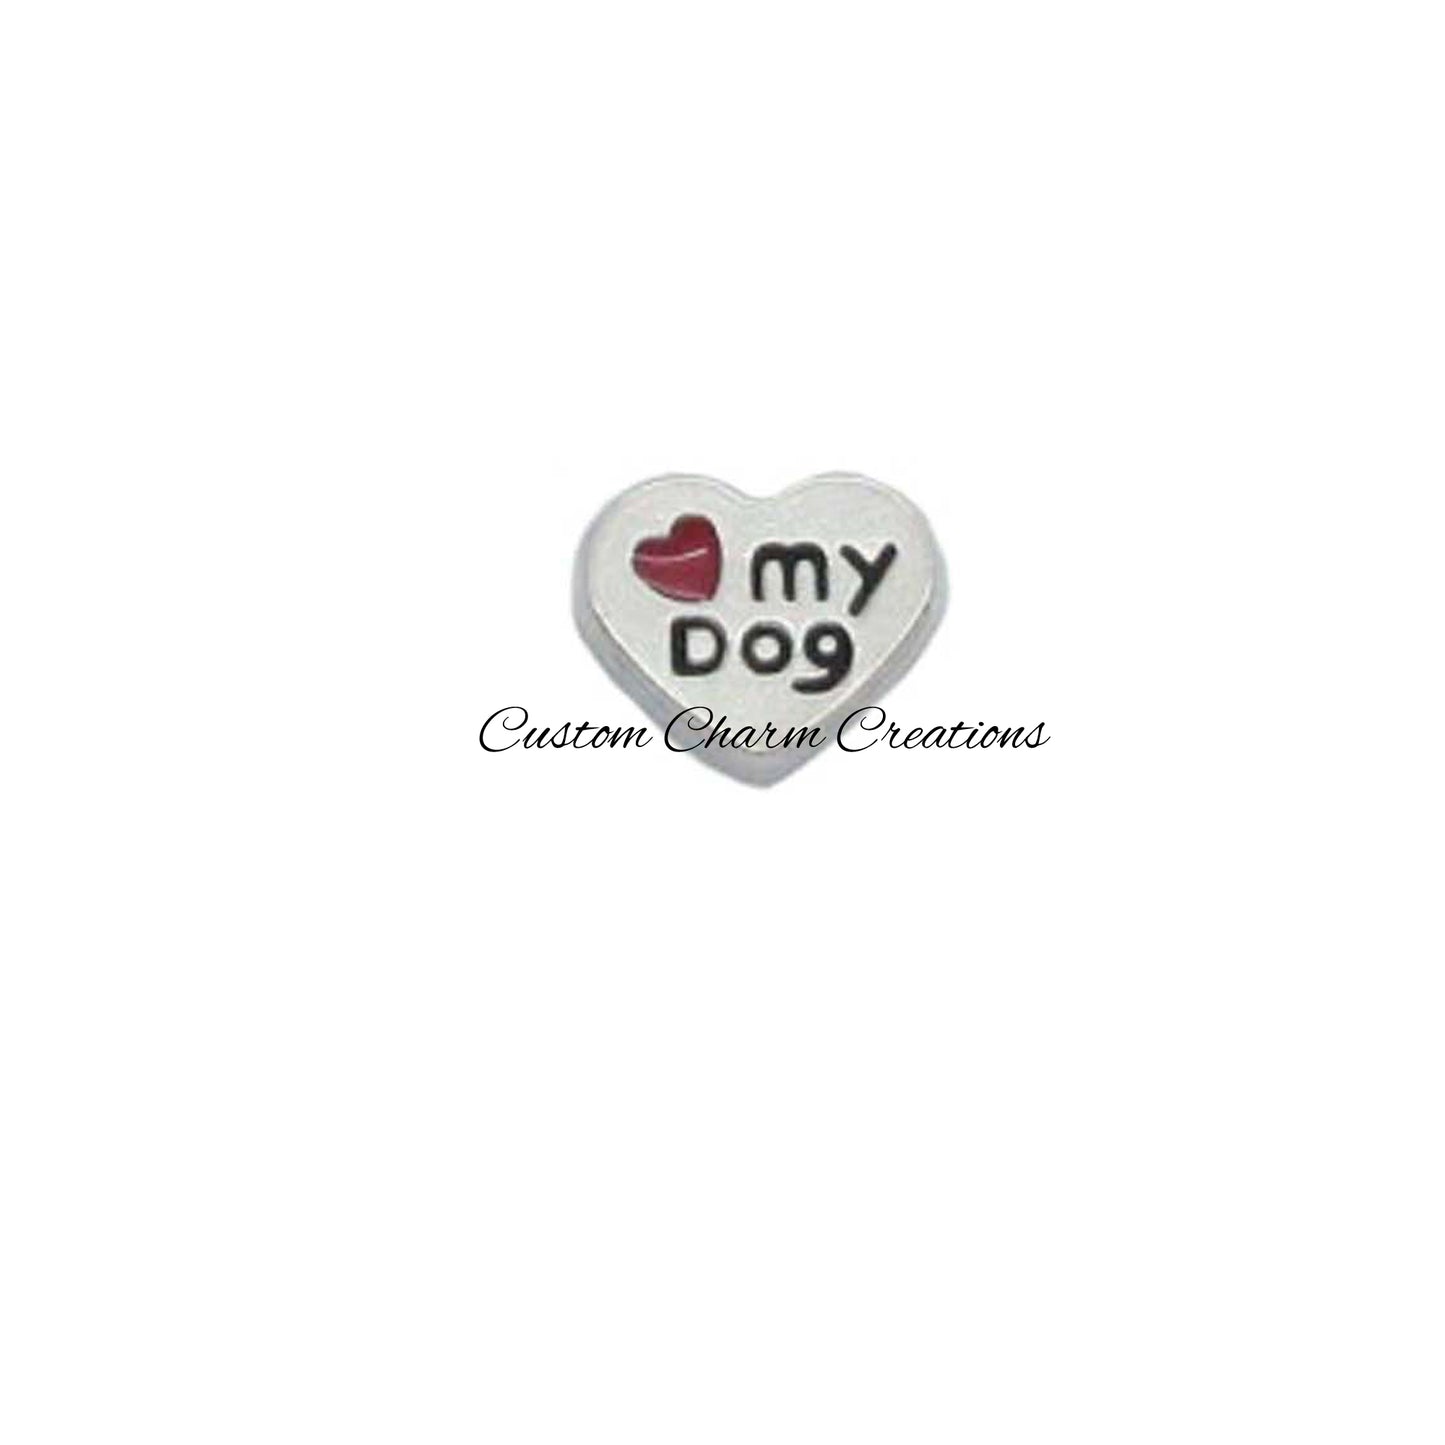 Love my Dog Floating Locket Charm - Custom Charm Creations